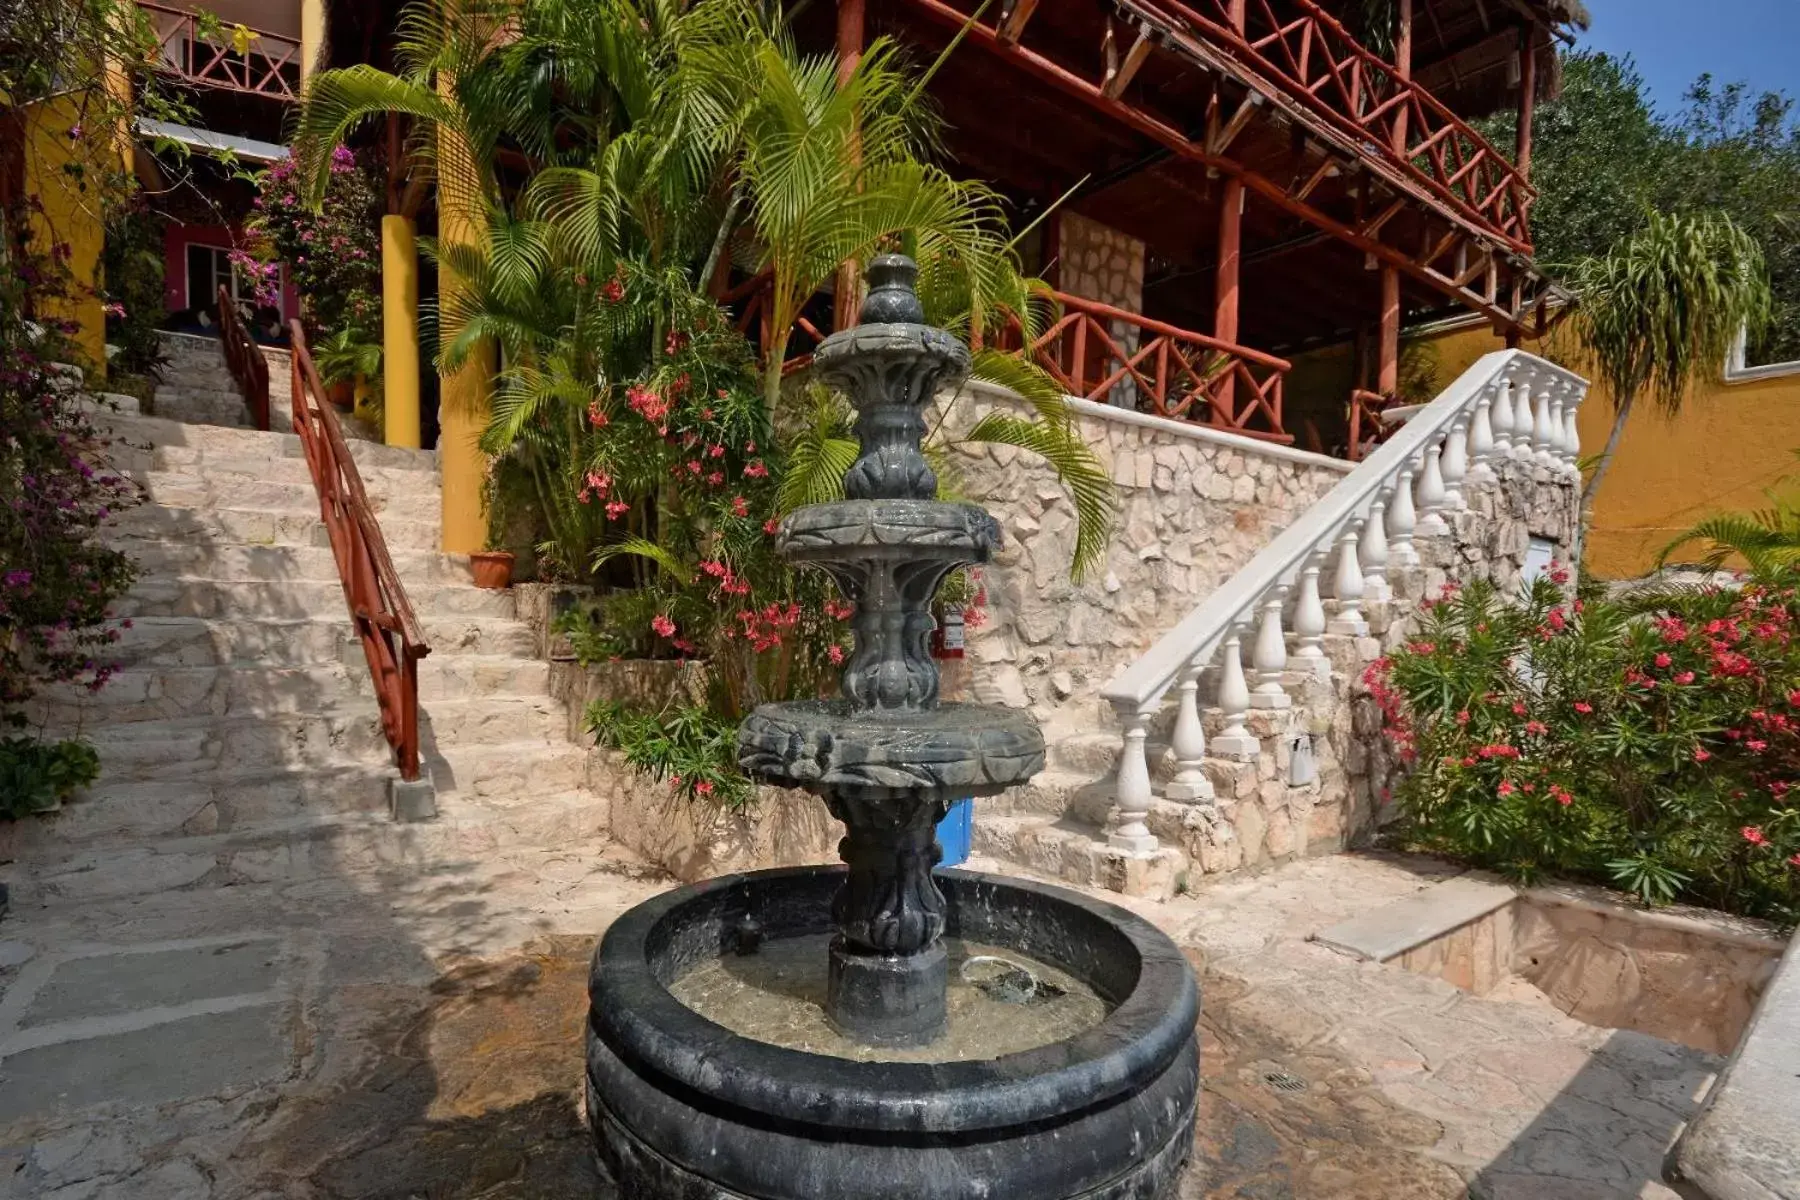 Hotel La Joya Isla Mujeres